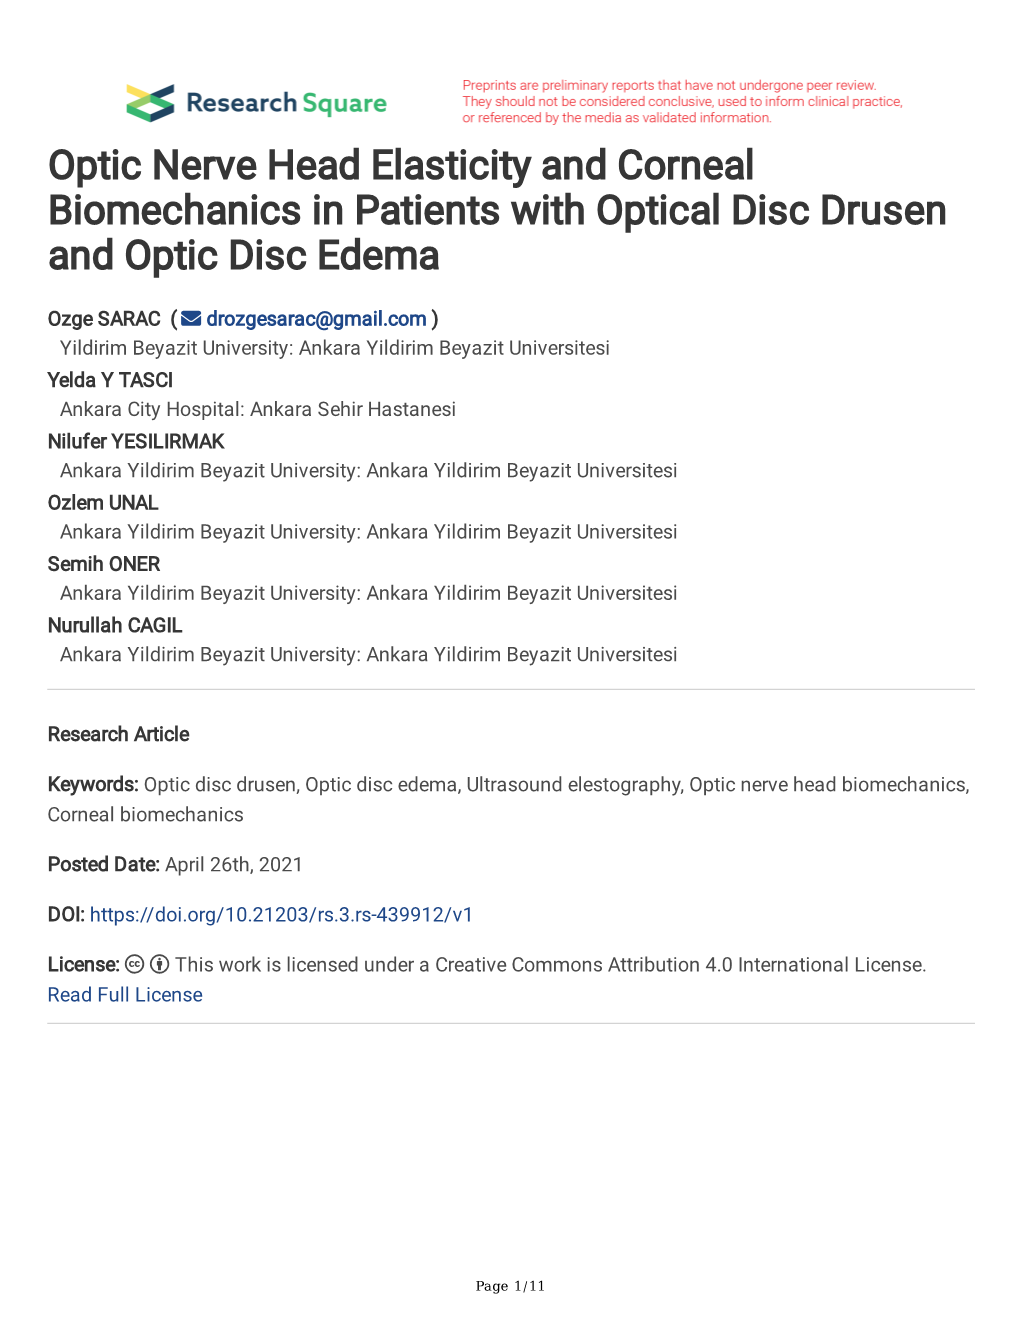 Optic Nerve Head Elasticity and Corneal Biomechanics in Patients with Optical Disc Drusen and Optic Disc Edema